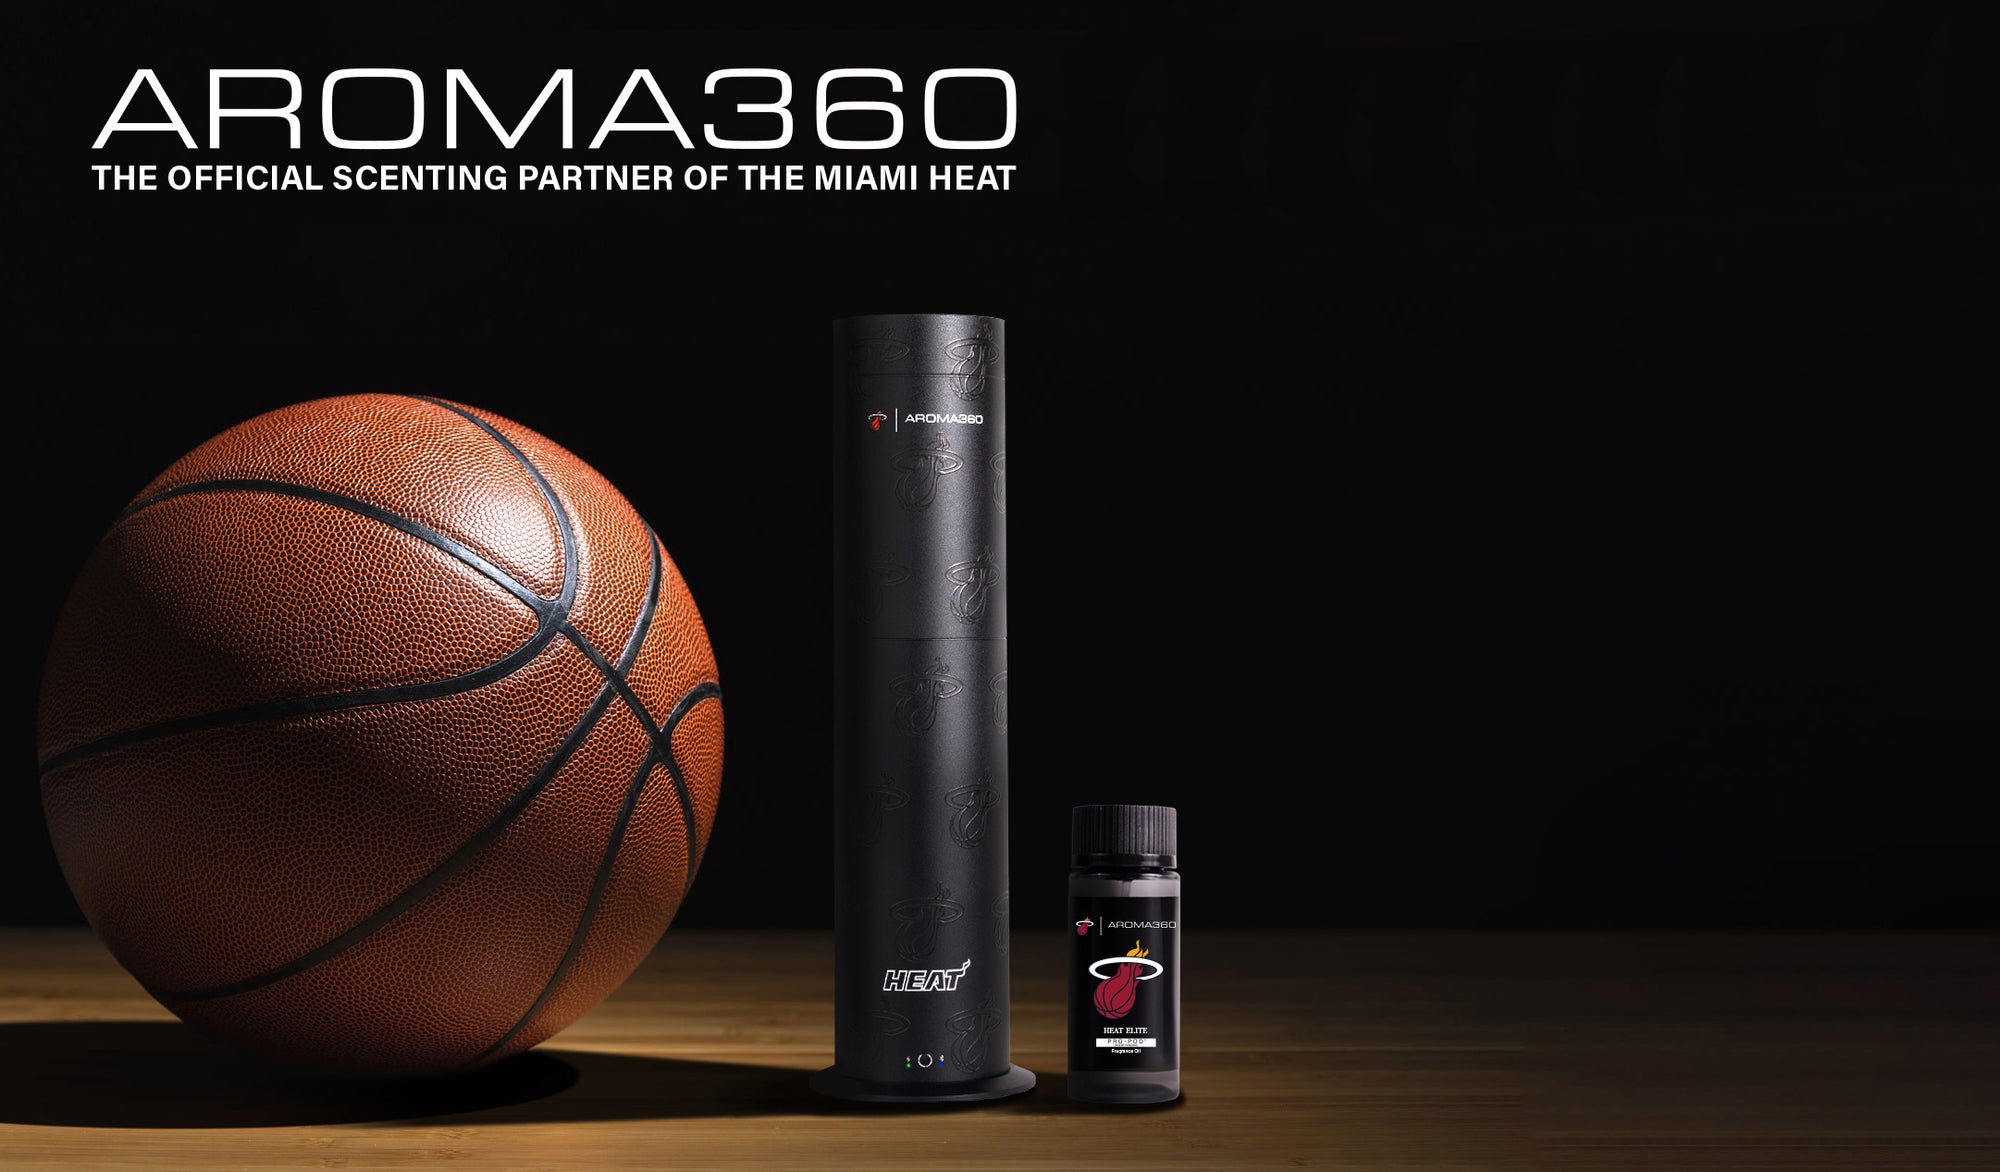 Aroma360 Scores Big with Miami Heat Partnership